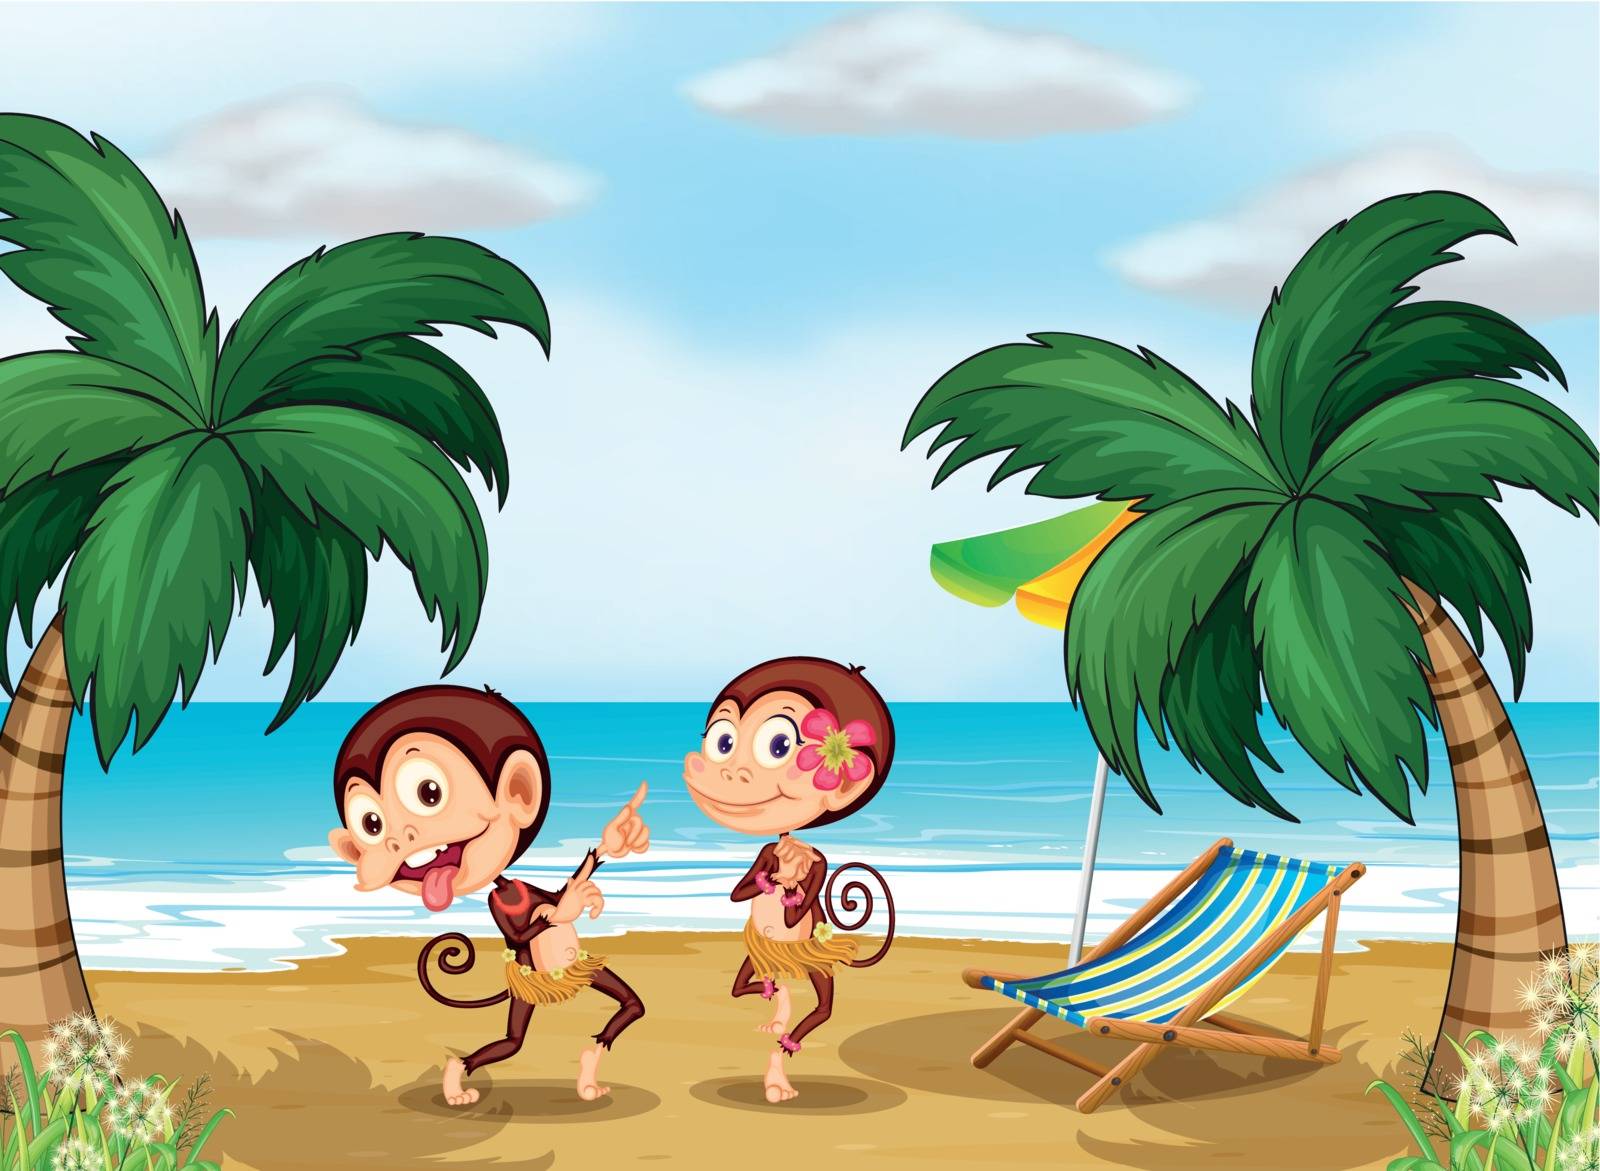 Illustration of the two monkeys wearing a hawaiian attire